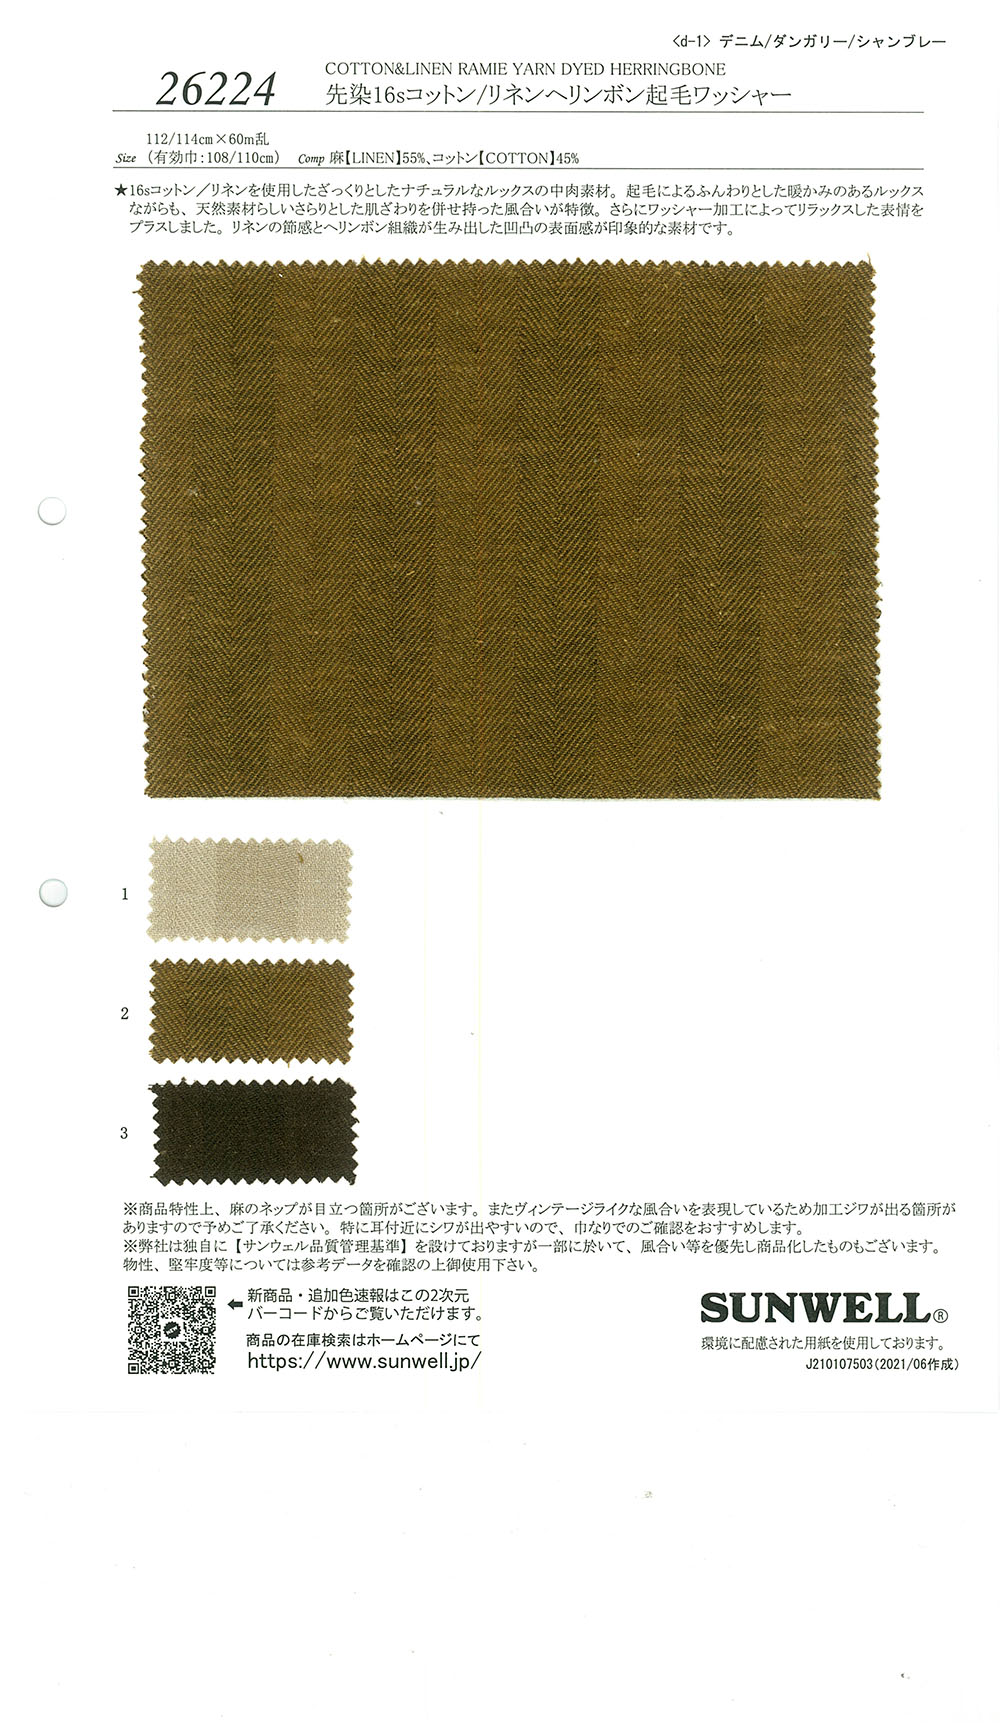 26224 Garngefärbte 16 Single Thread Baumwolle/Leinen Herringbone Fuzzy Washer Processing[Textilgewebe] SUNWELL